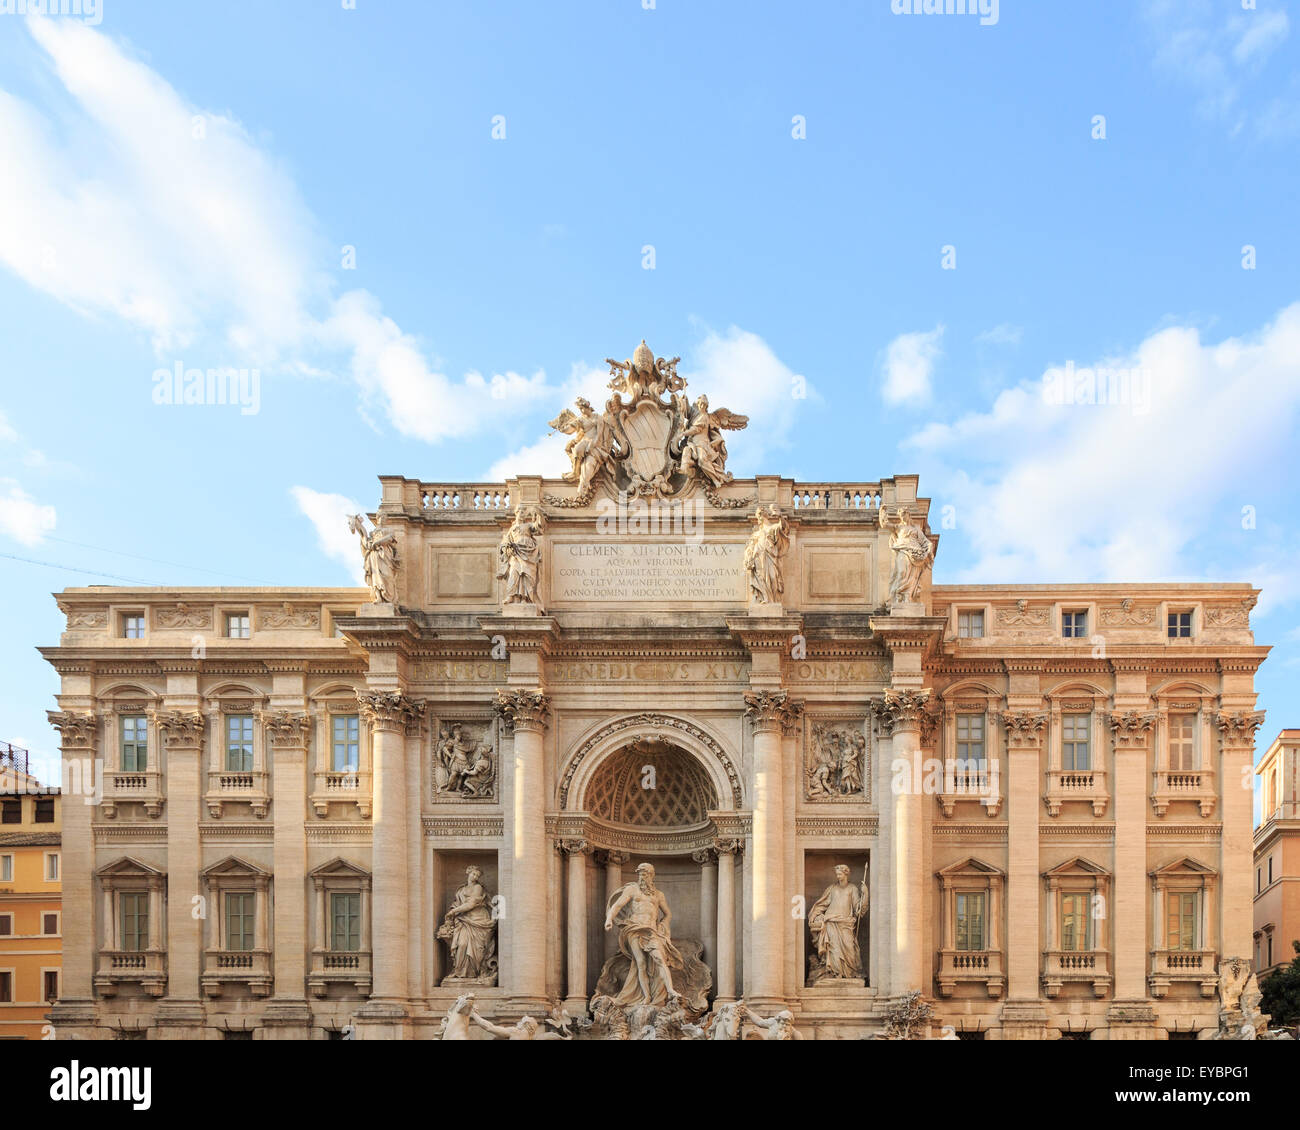 The Trevi Fountain in Rome, Italy. Stock Photo